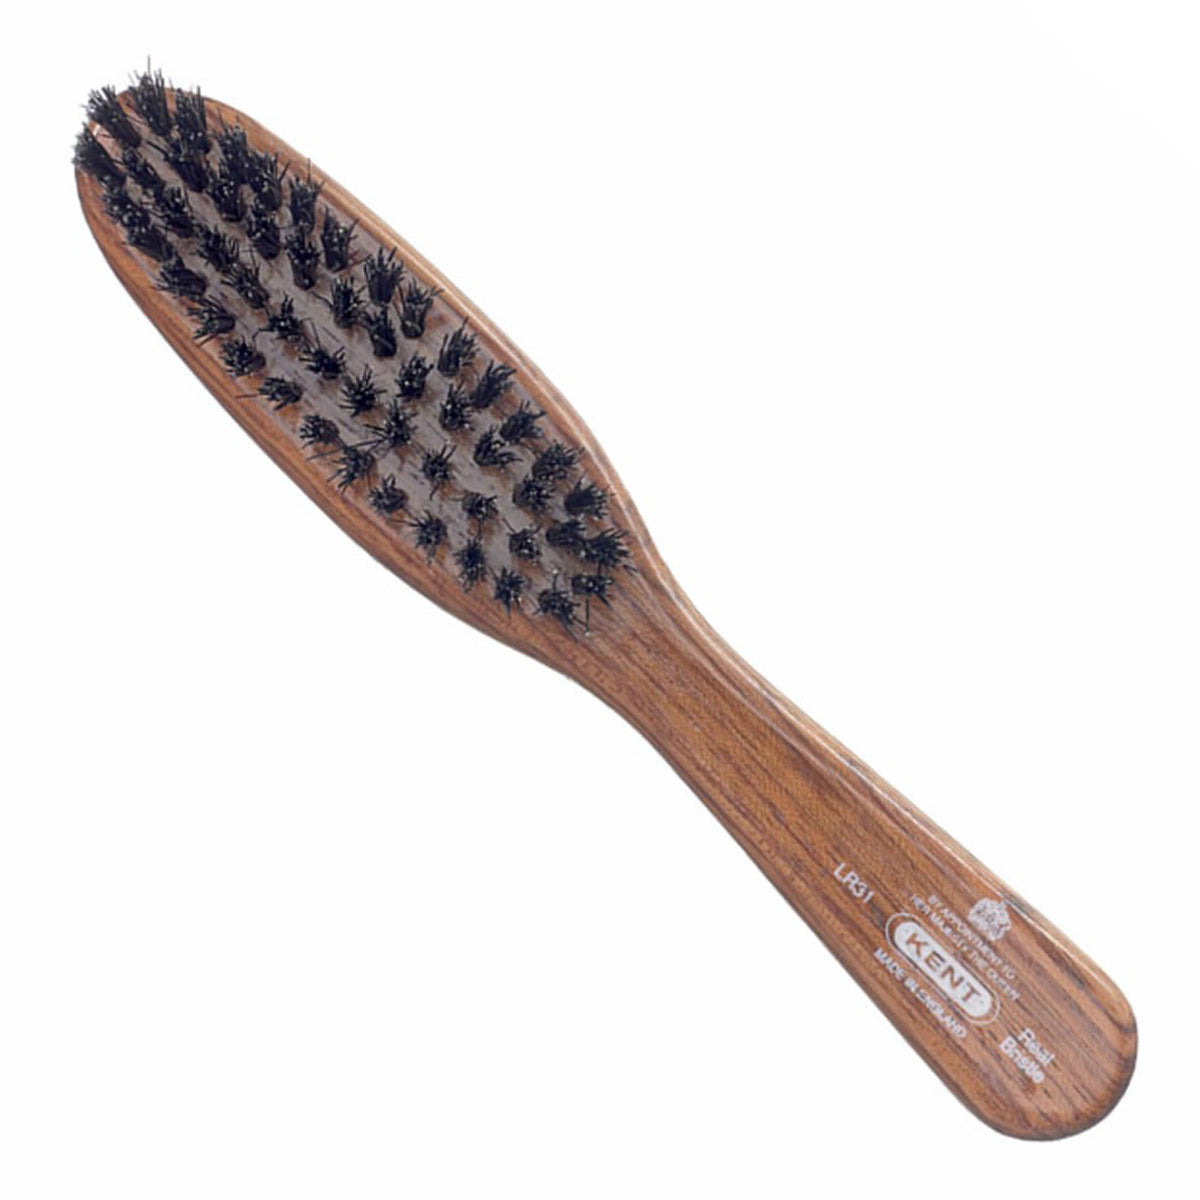 Primary image of Women's Round Bristle Brush (Small) - LR31